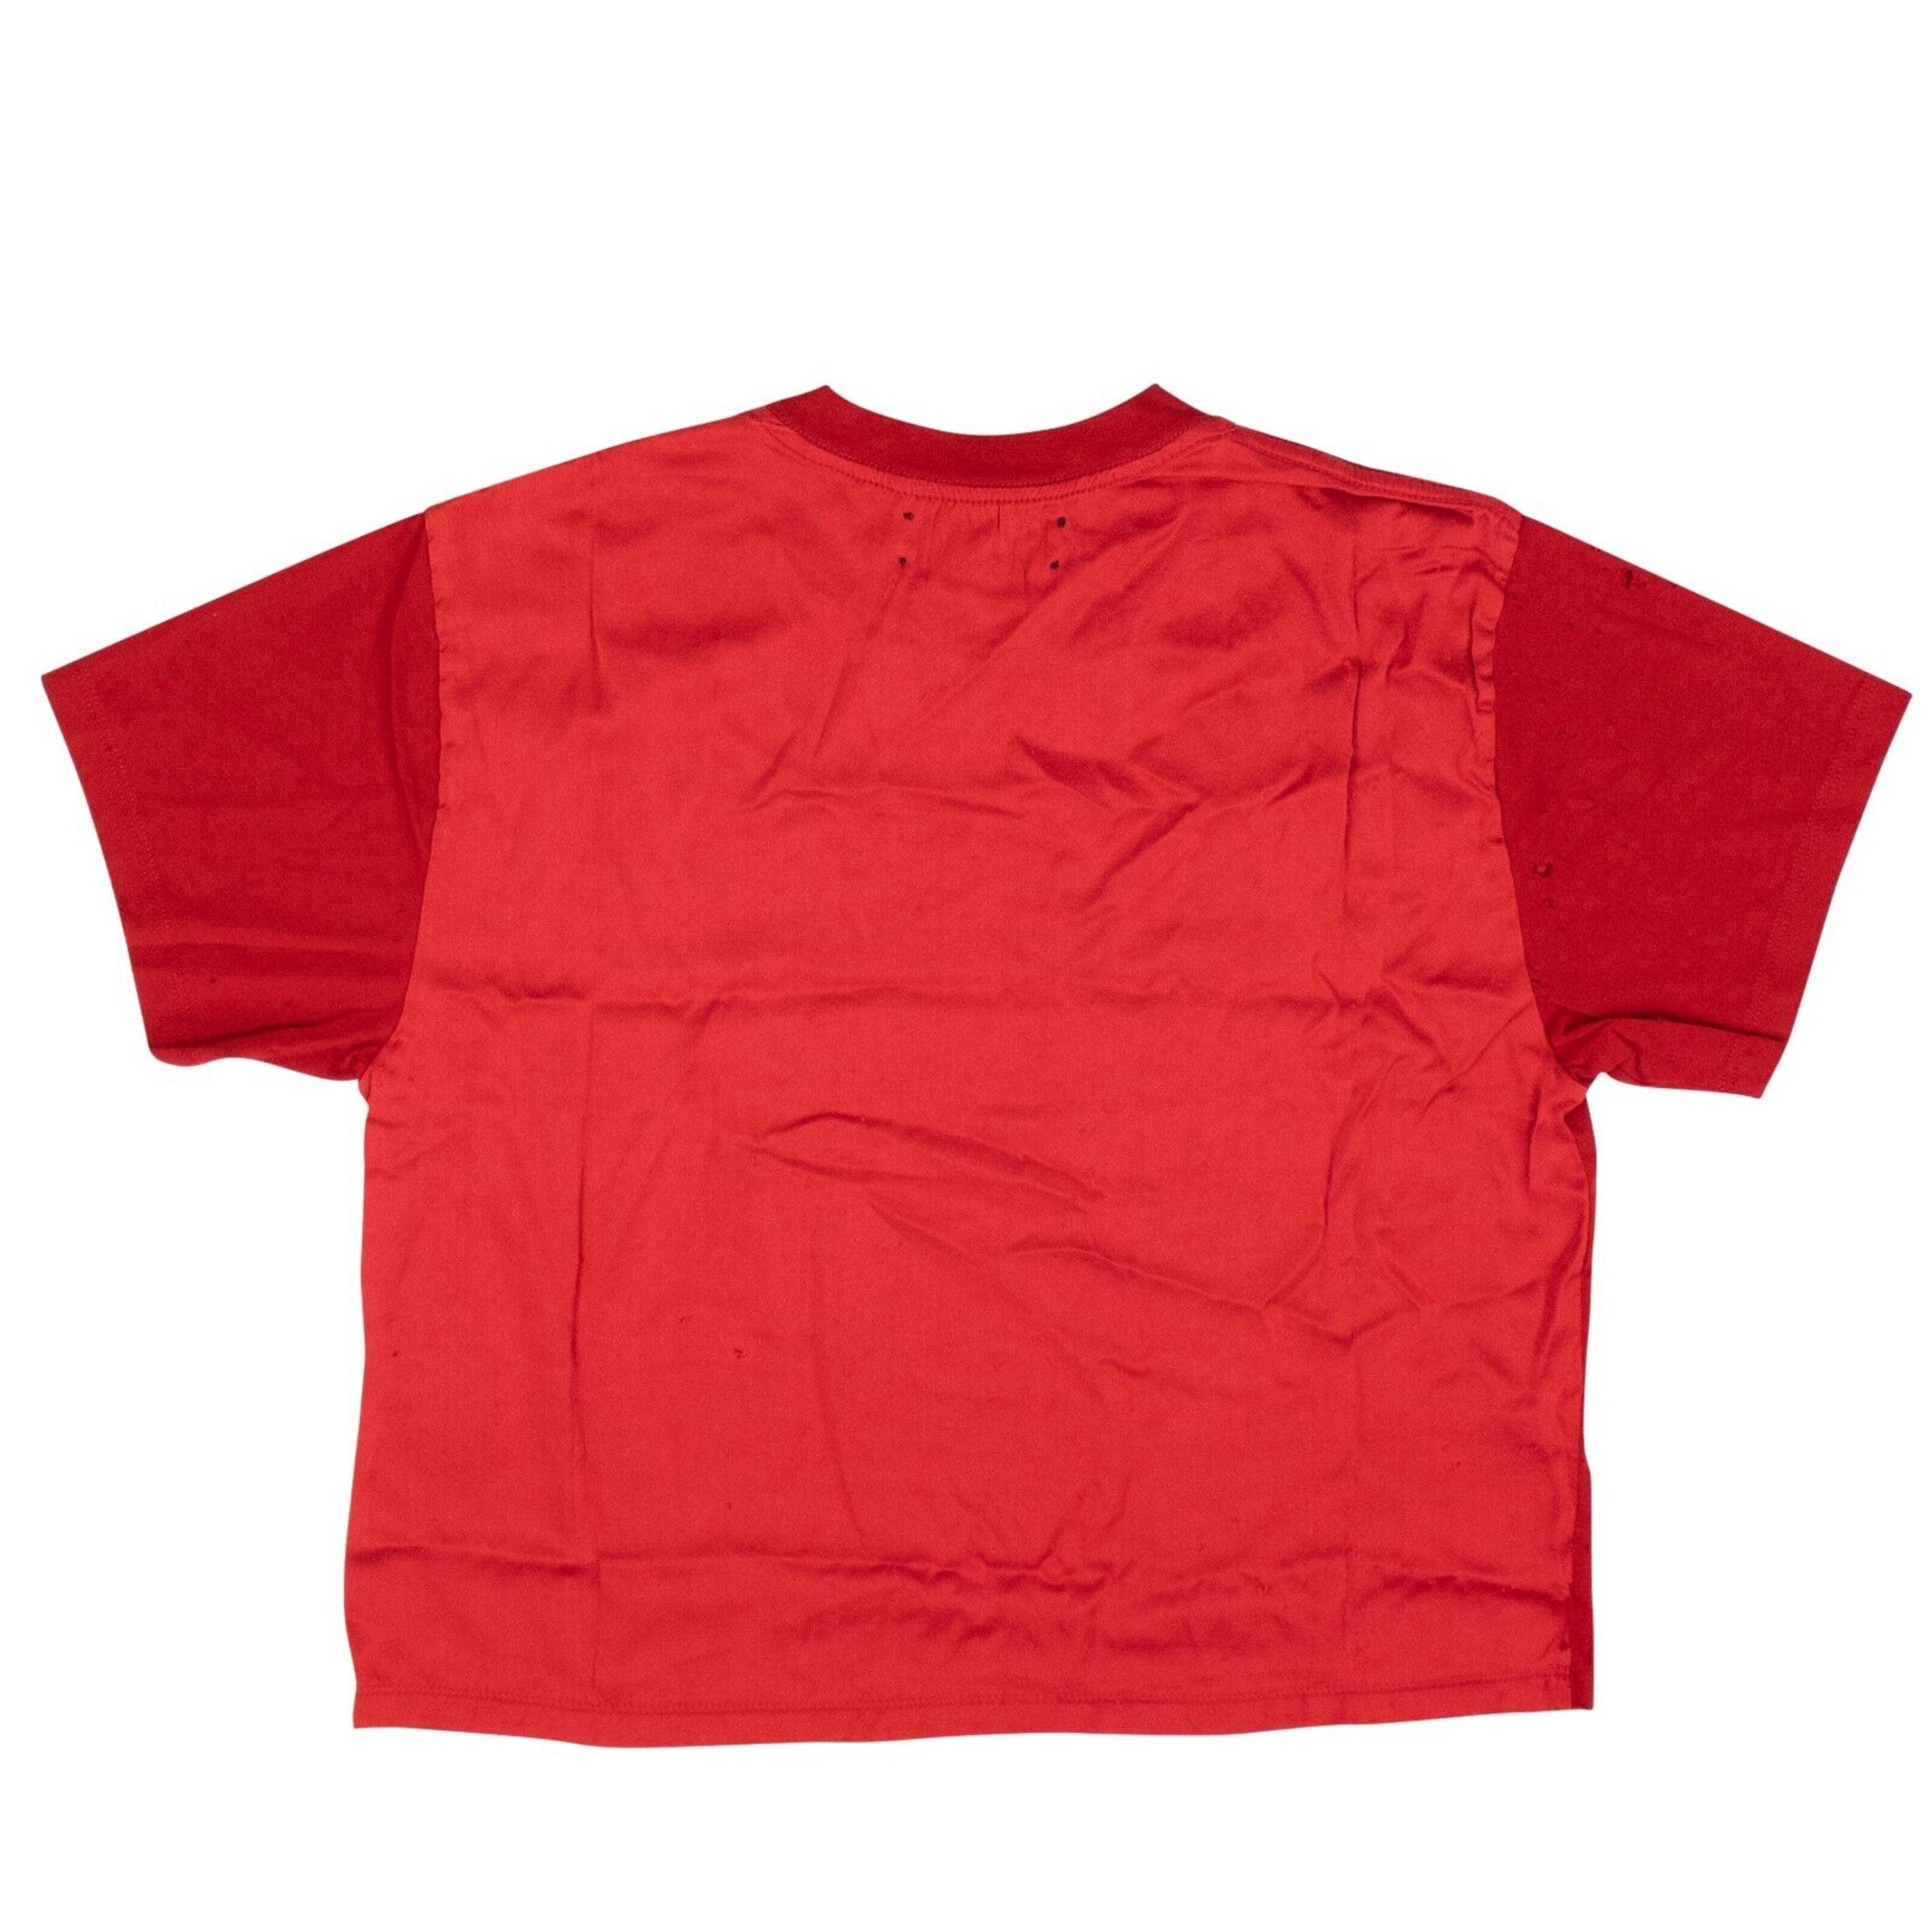 Alternate View 2 of Red Slash Cotton T-Shirt